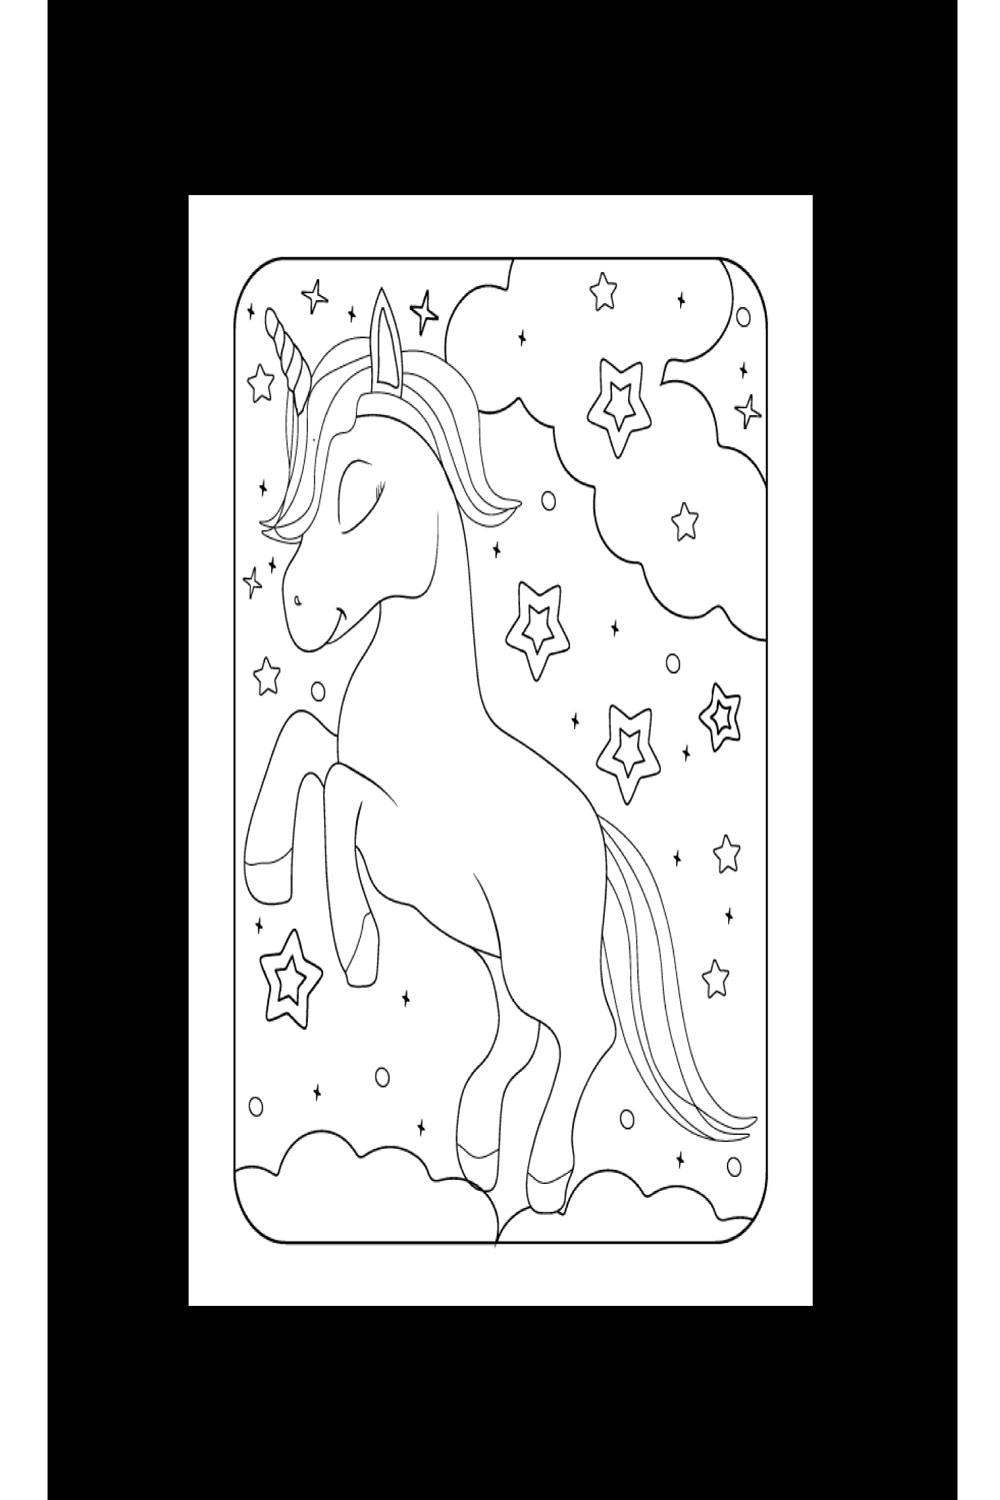 Coloring Unicorn Page Design pinterest image.